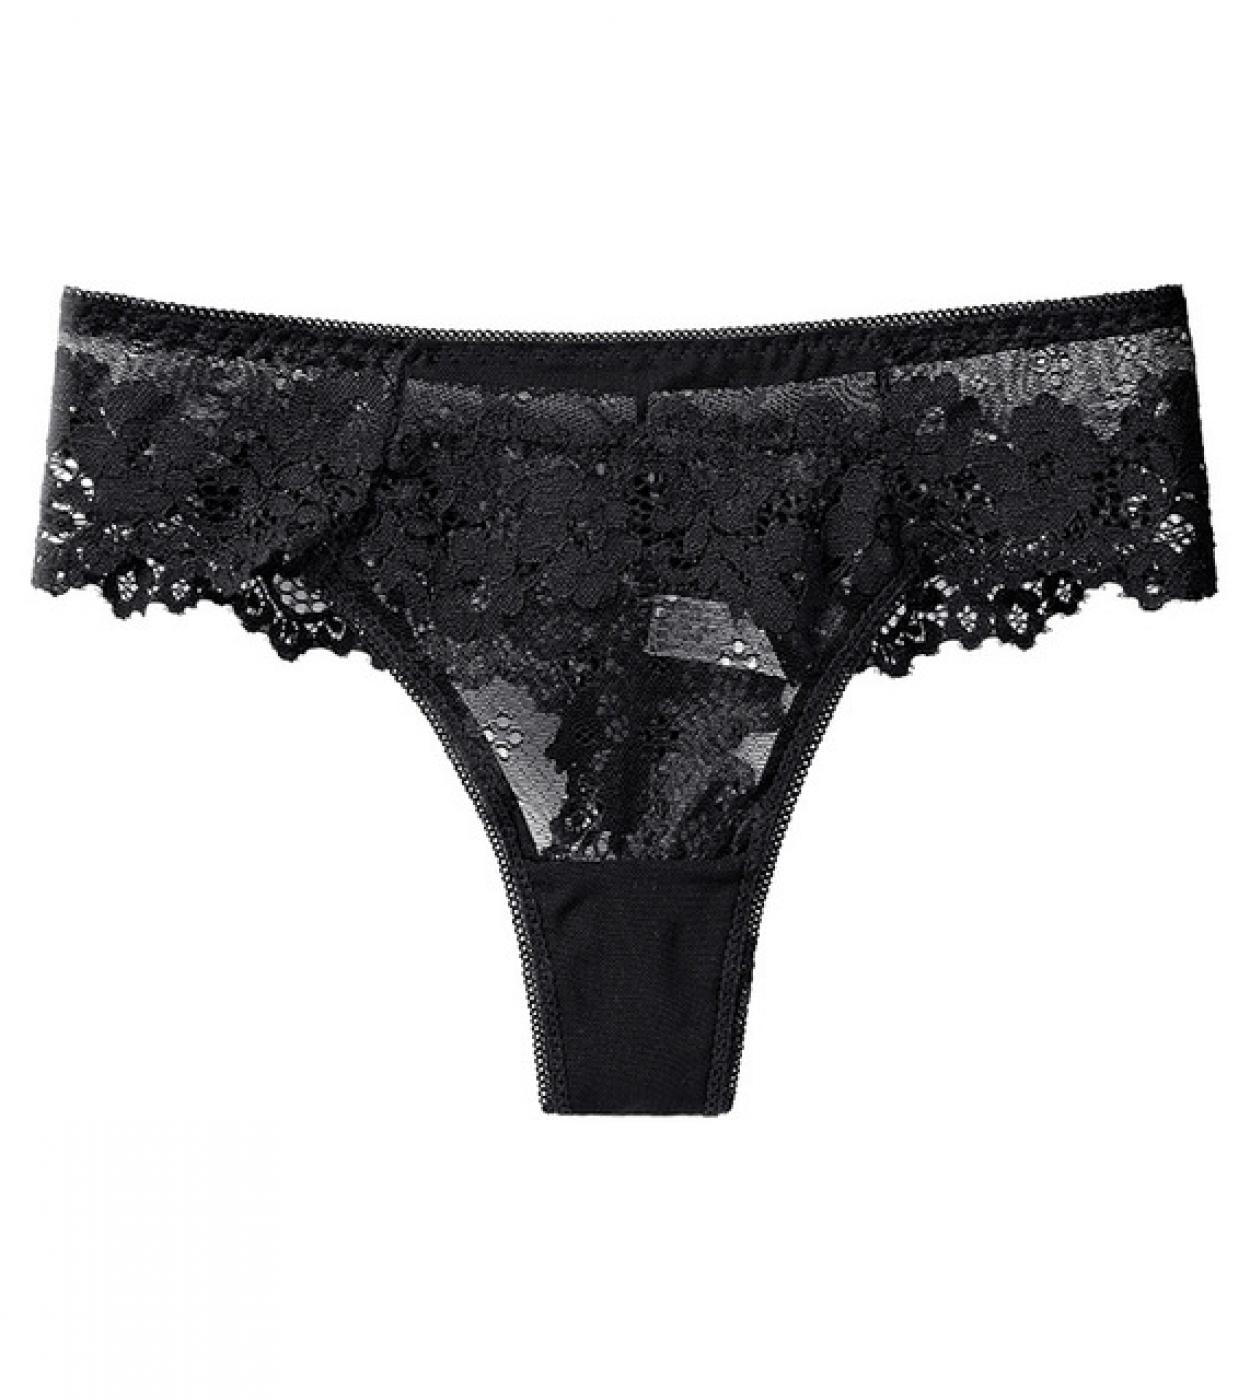 New Panties Women Lace Underwear Low-waist Briefs Hollow Out G